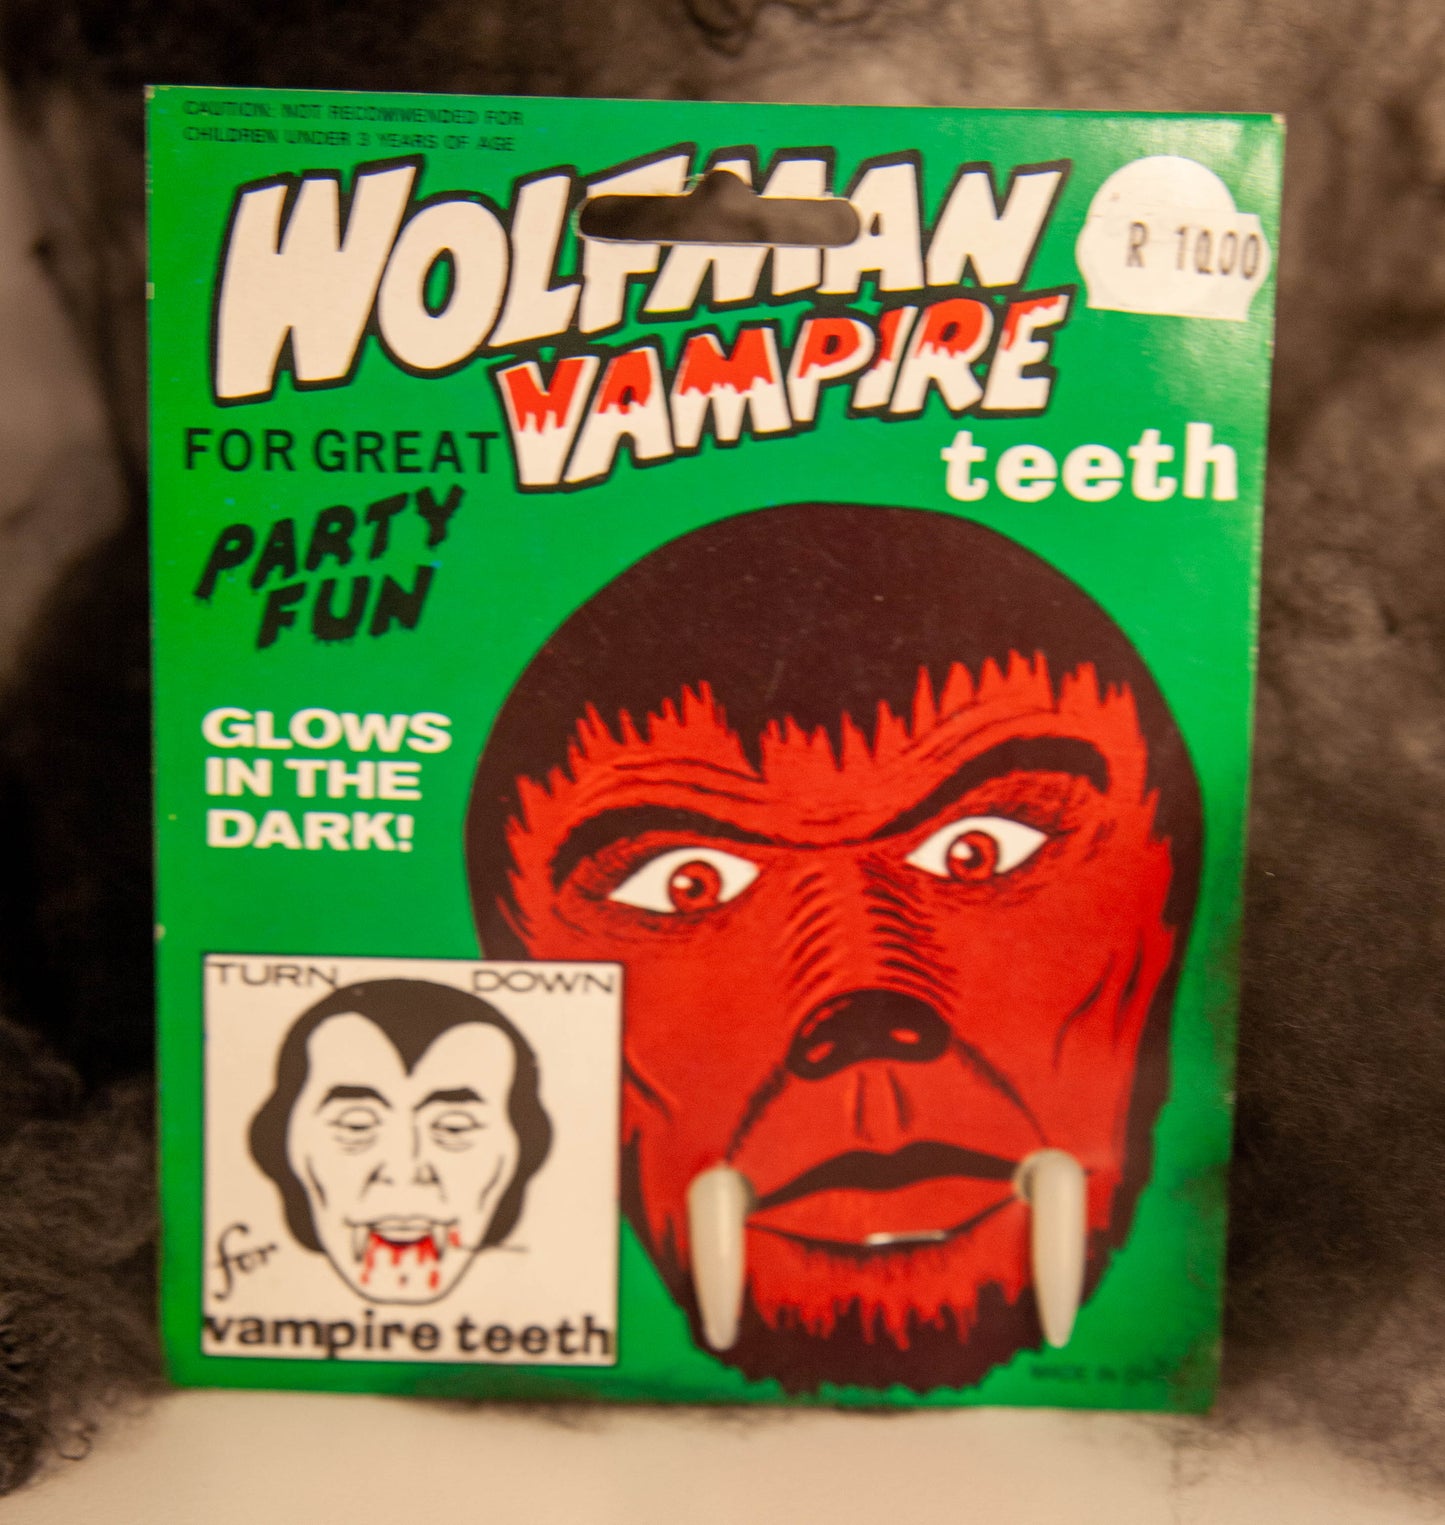 Wolfman Vampire Teeth